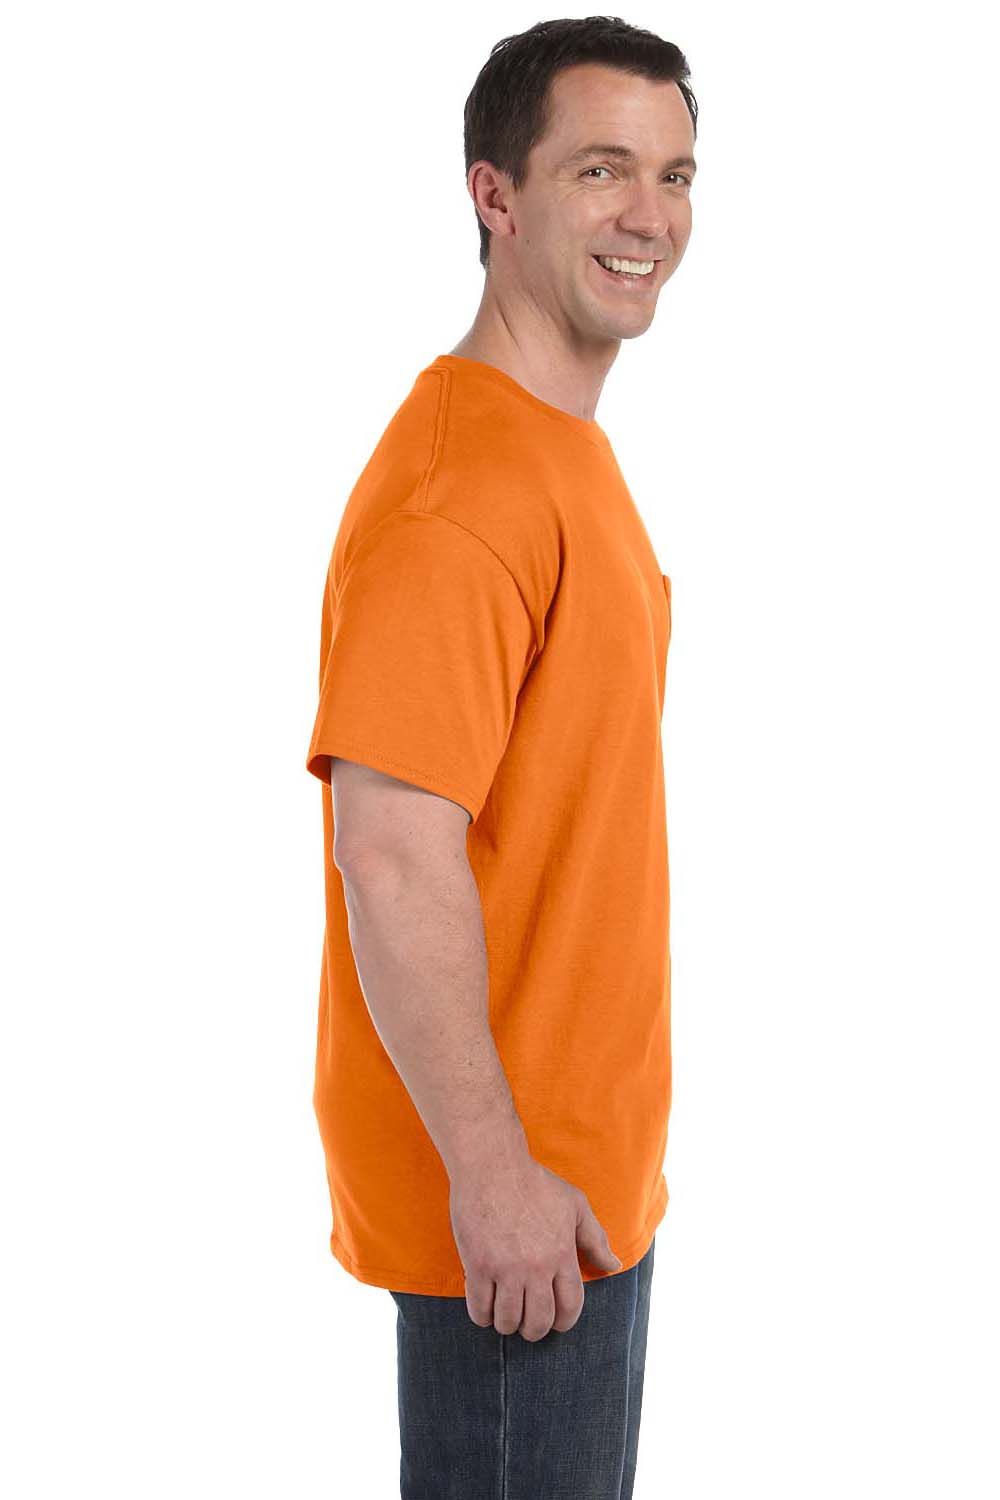 Hanes H5590 Mens ComfortSoft Short Sleeve Crewneck T-Shirt w/ Pocket Orange Side